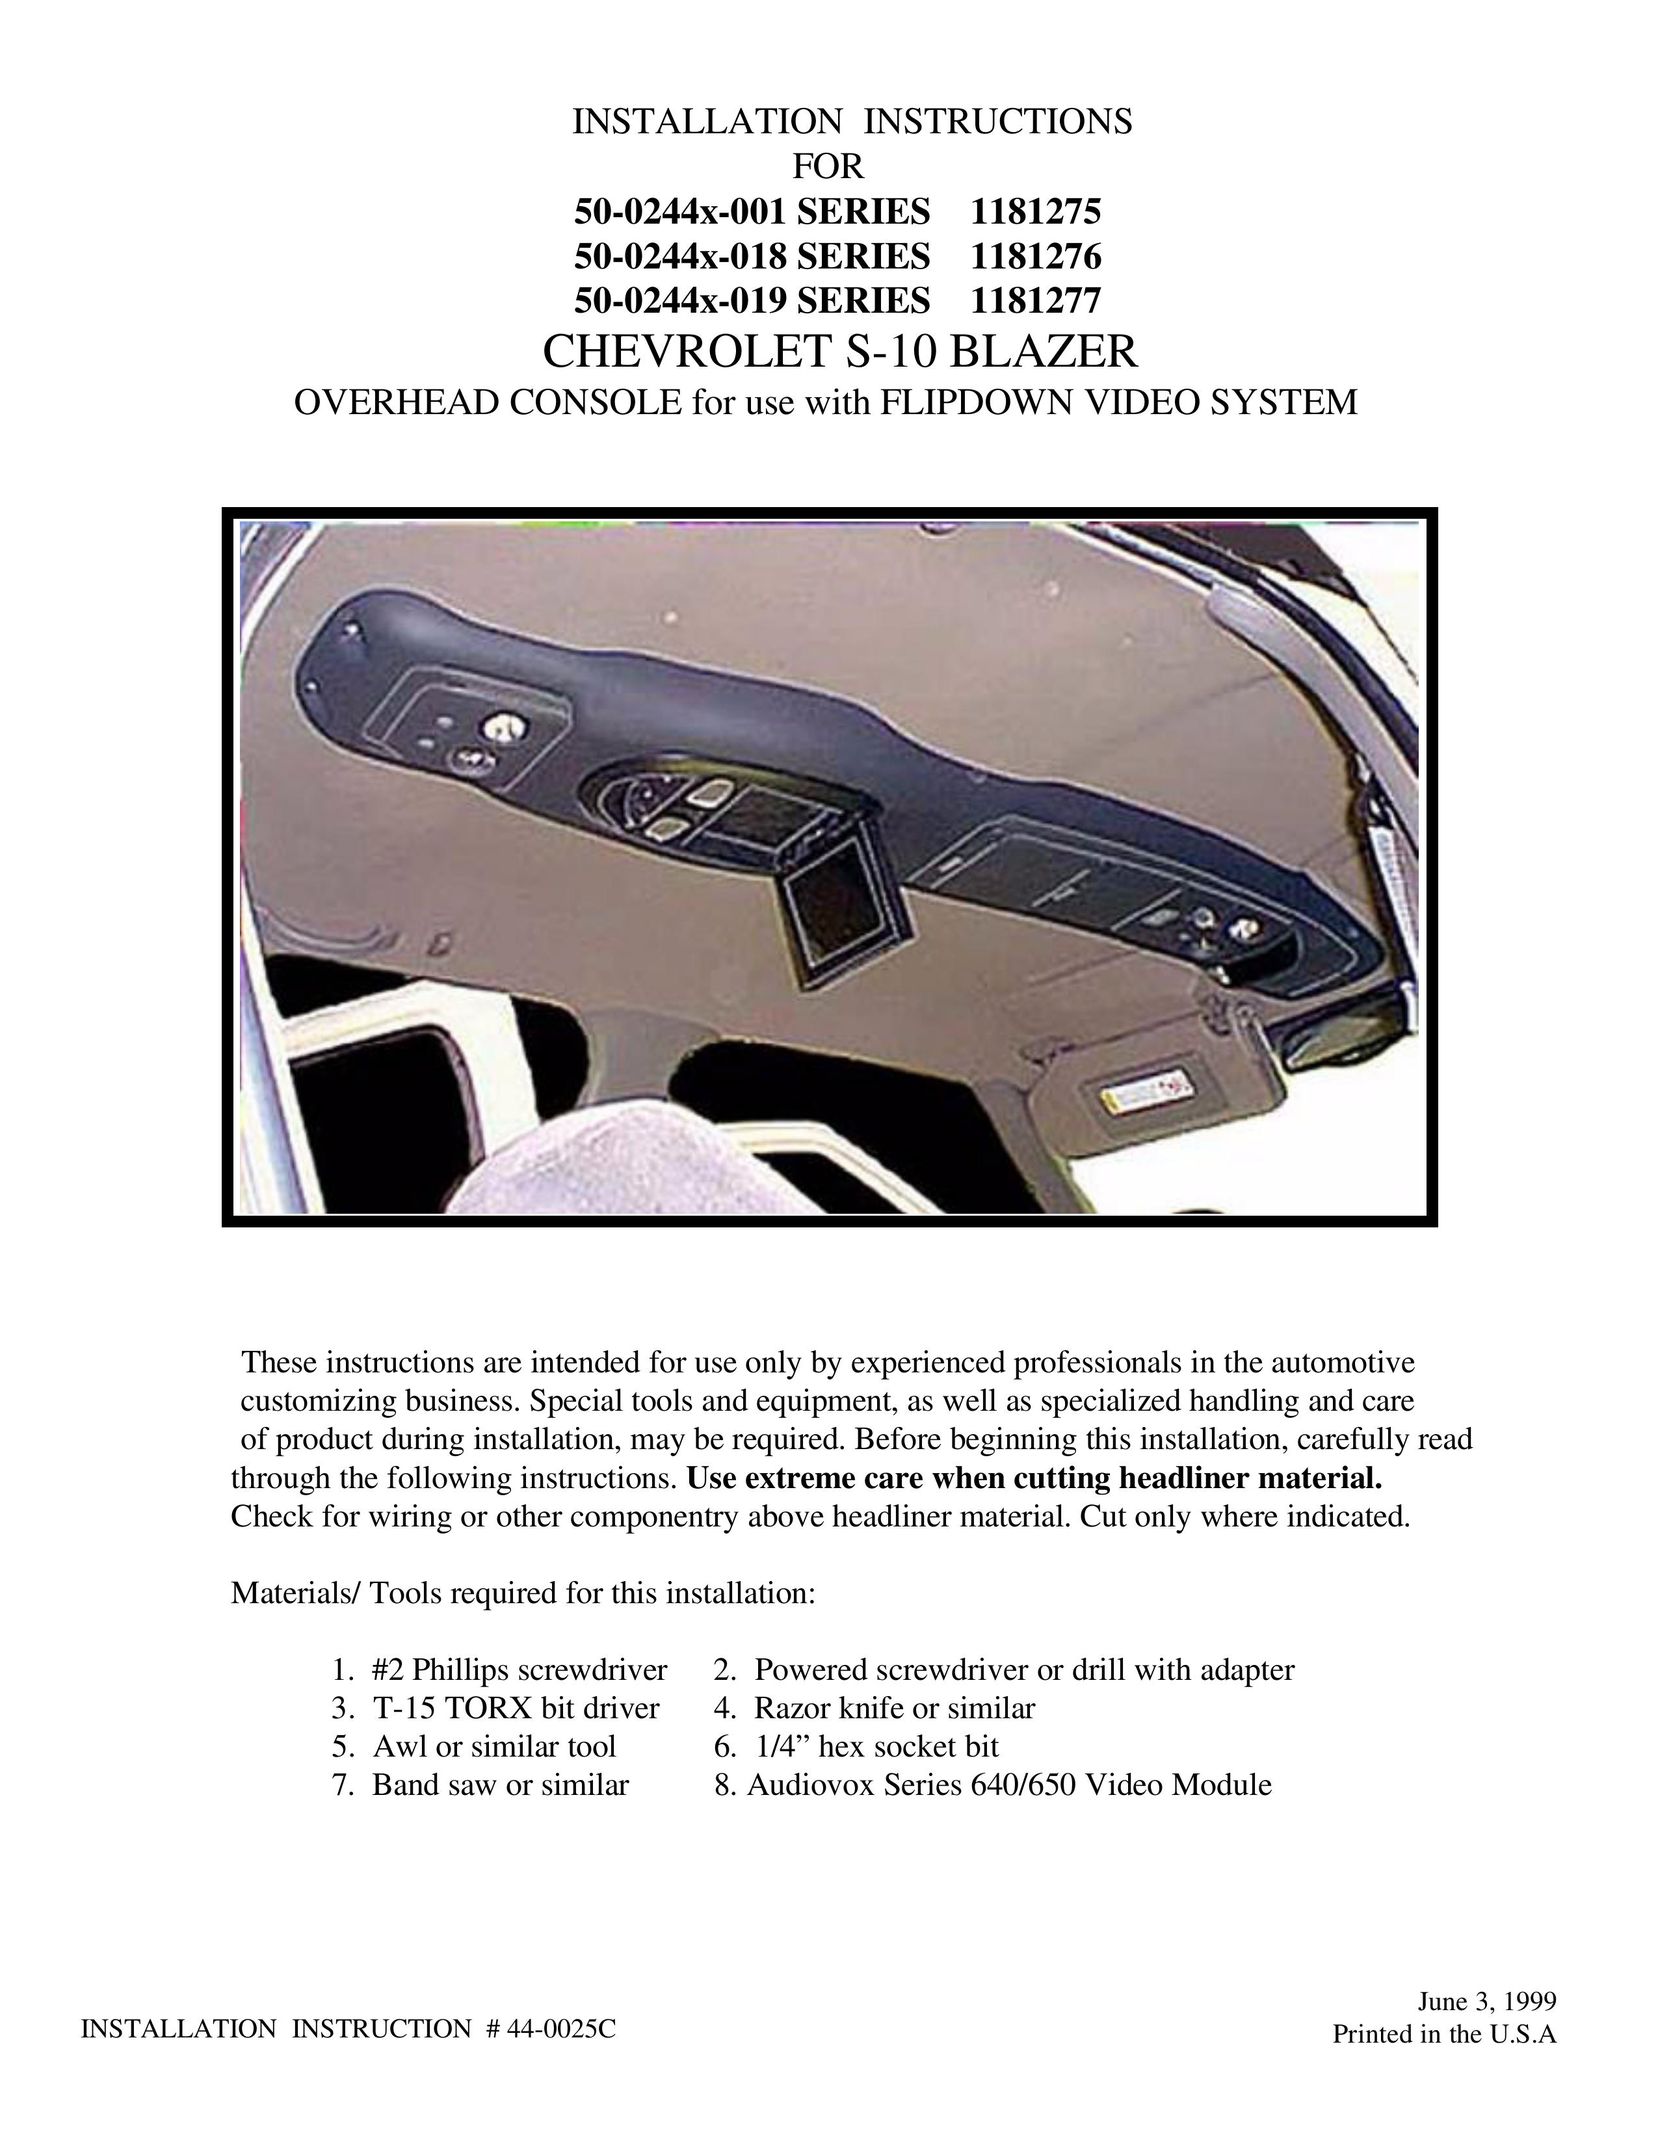 Audiovox 50-0244x-019 SERIES Car Video System User Manual